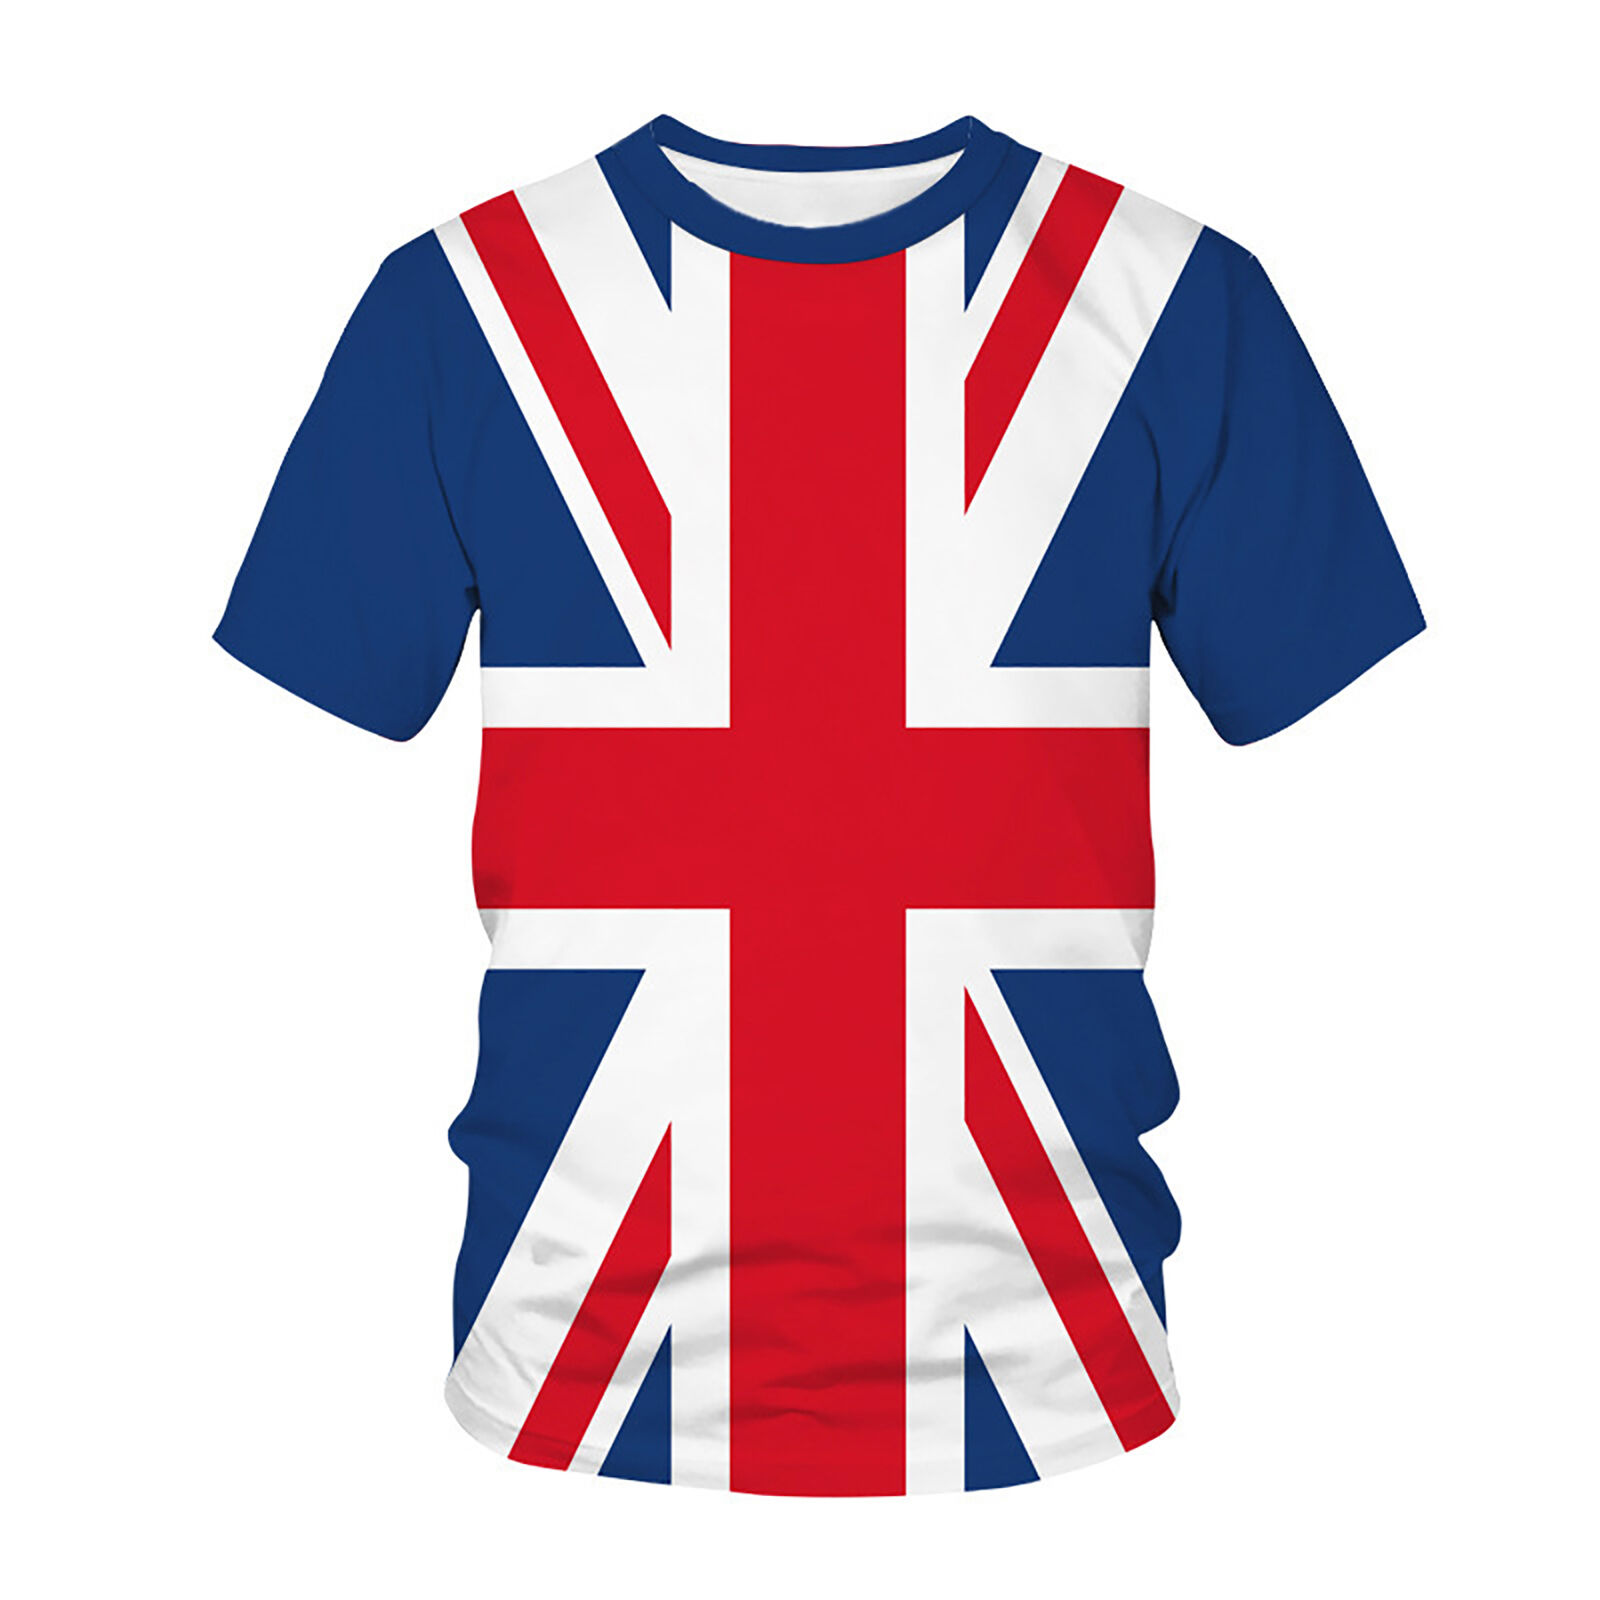 Unisex Adults Union Jack T-Shirt Casual Short Sleeve British Flag Top S-6XL